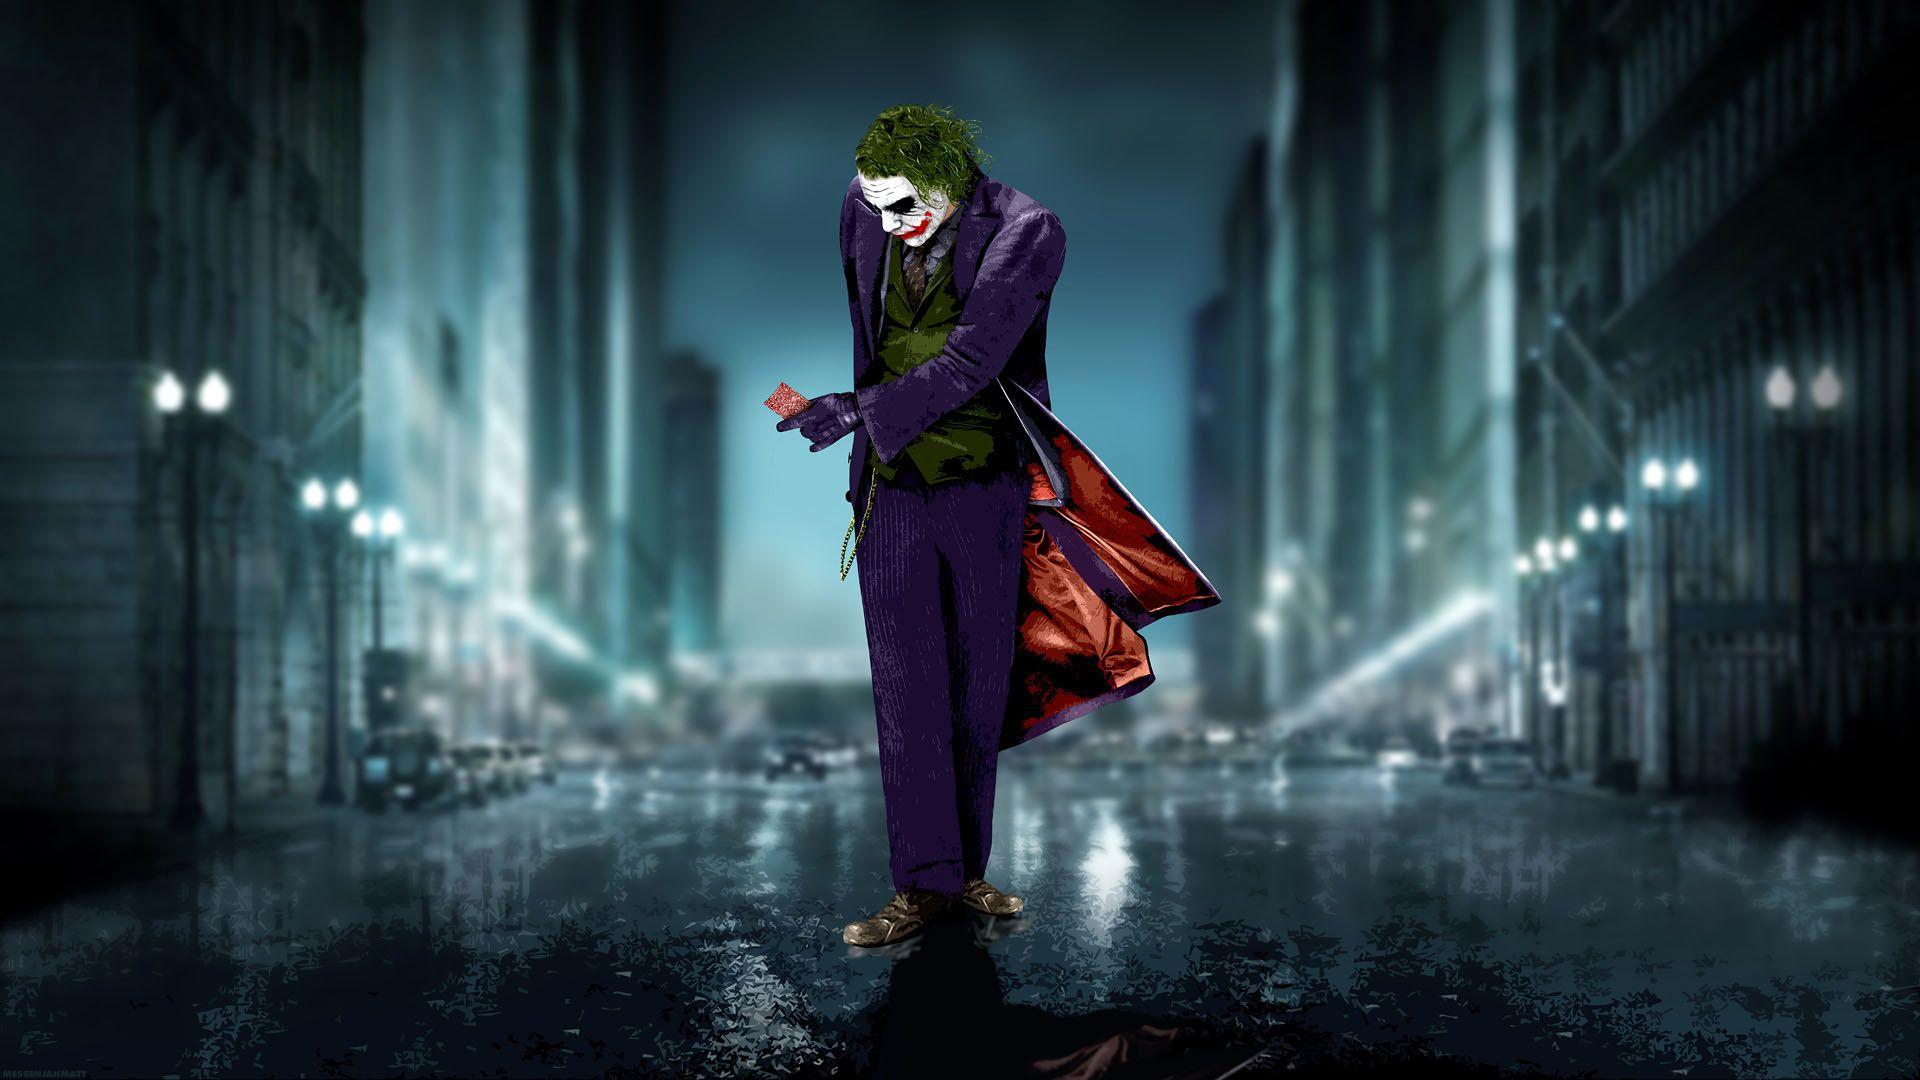 The Joker In Gotham Dark Knight HD 16 9